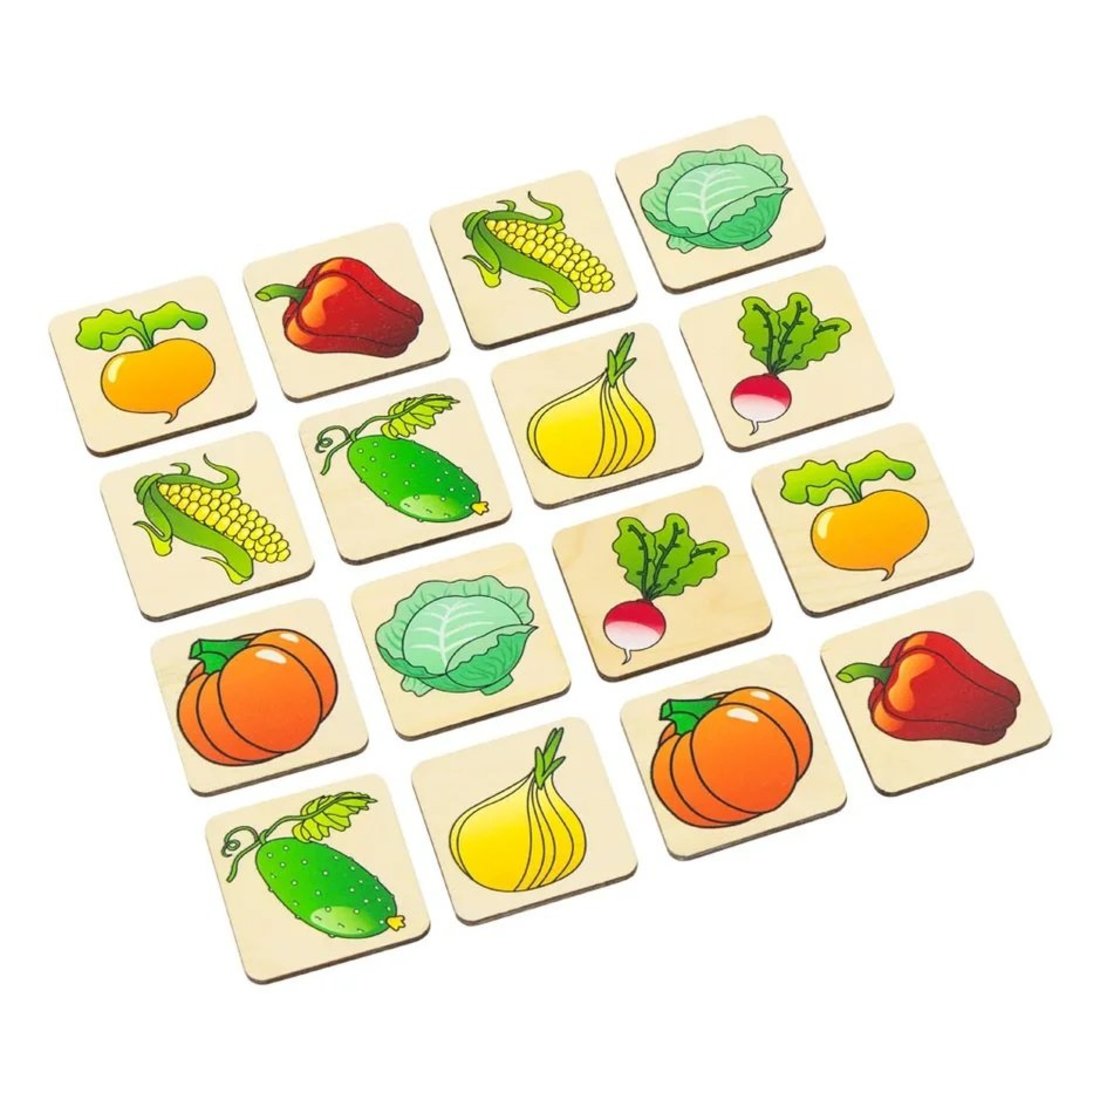 Игра Мемори Овощи, 24 карточки